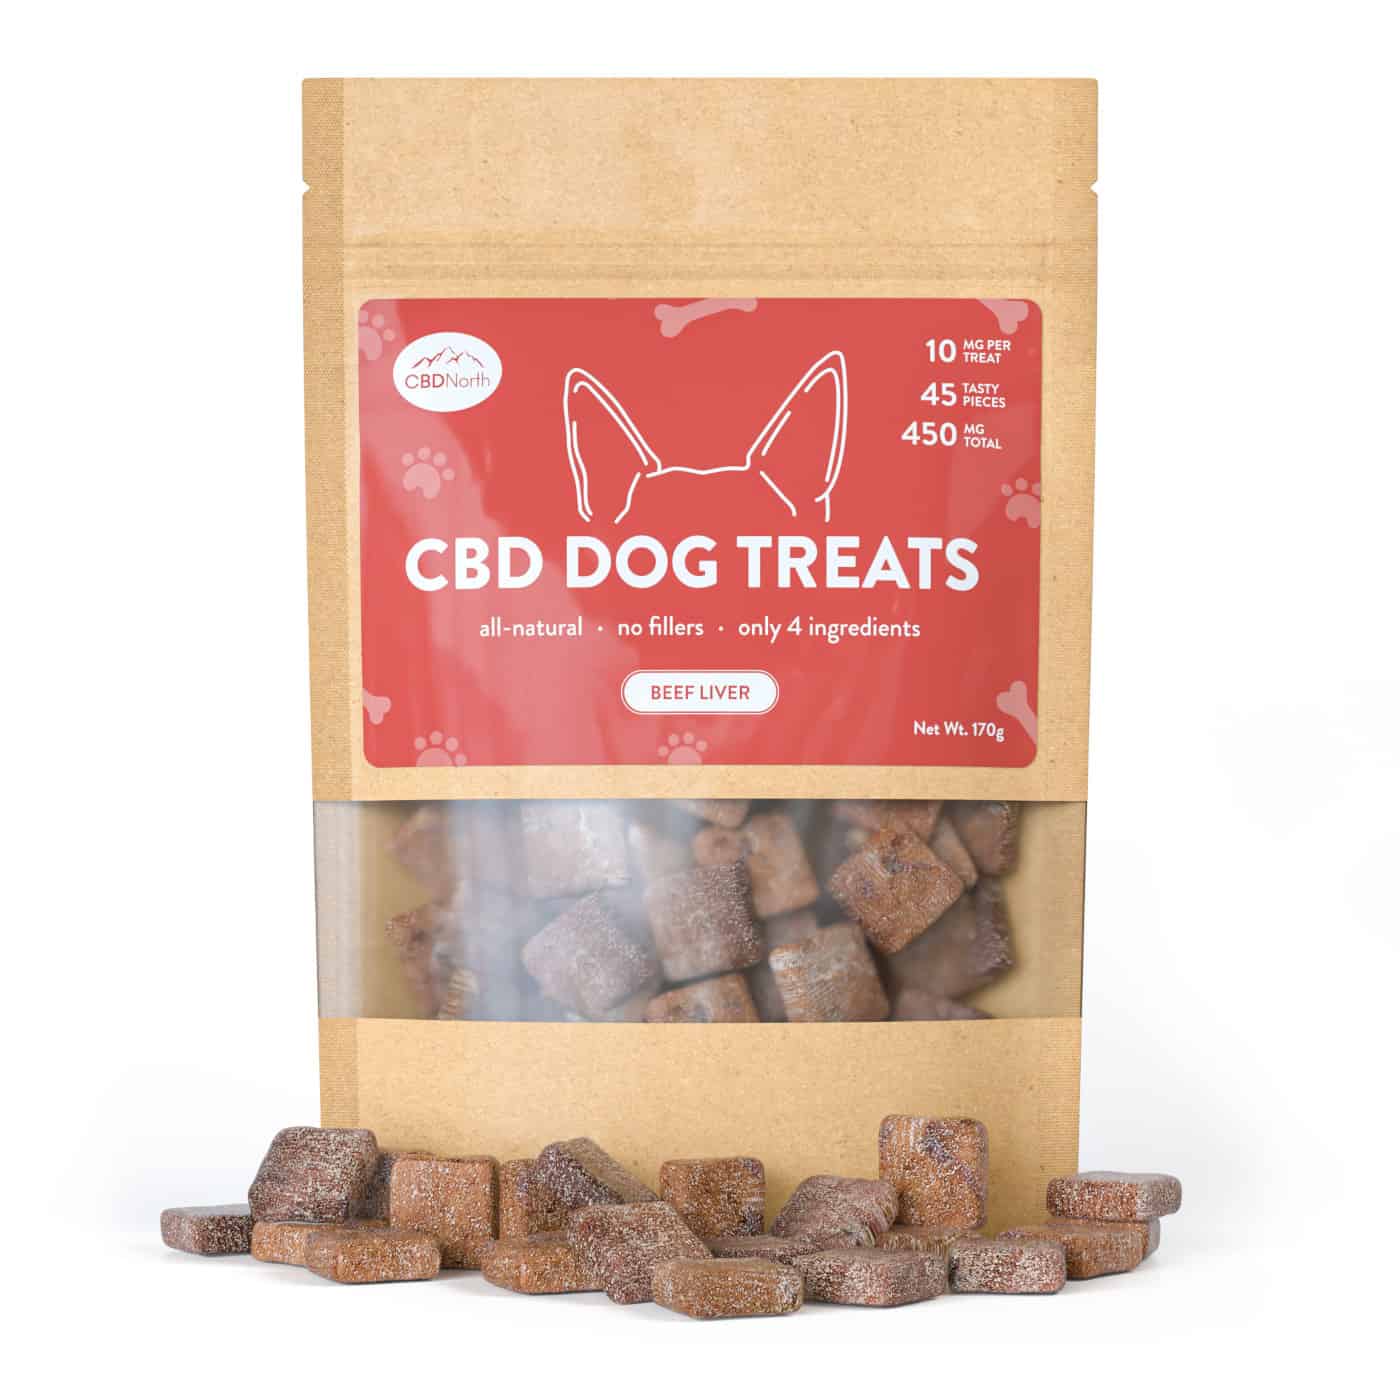 CBD Dog Treats: Best in Canada by CBDNorth